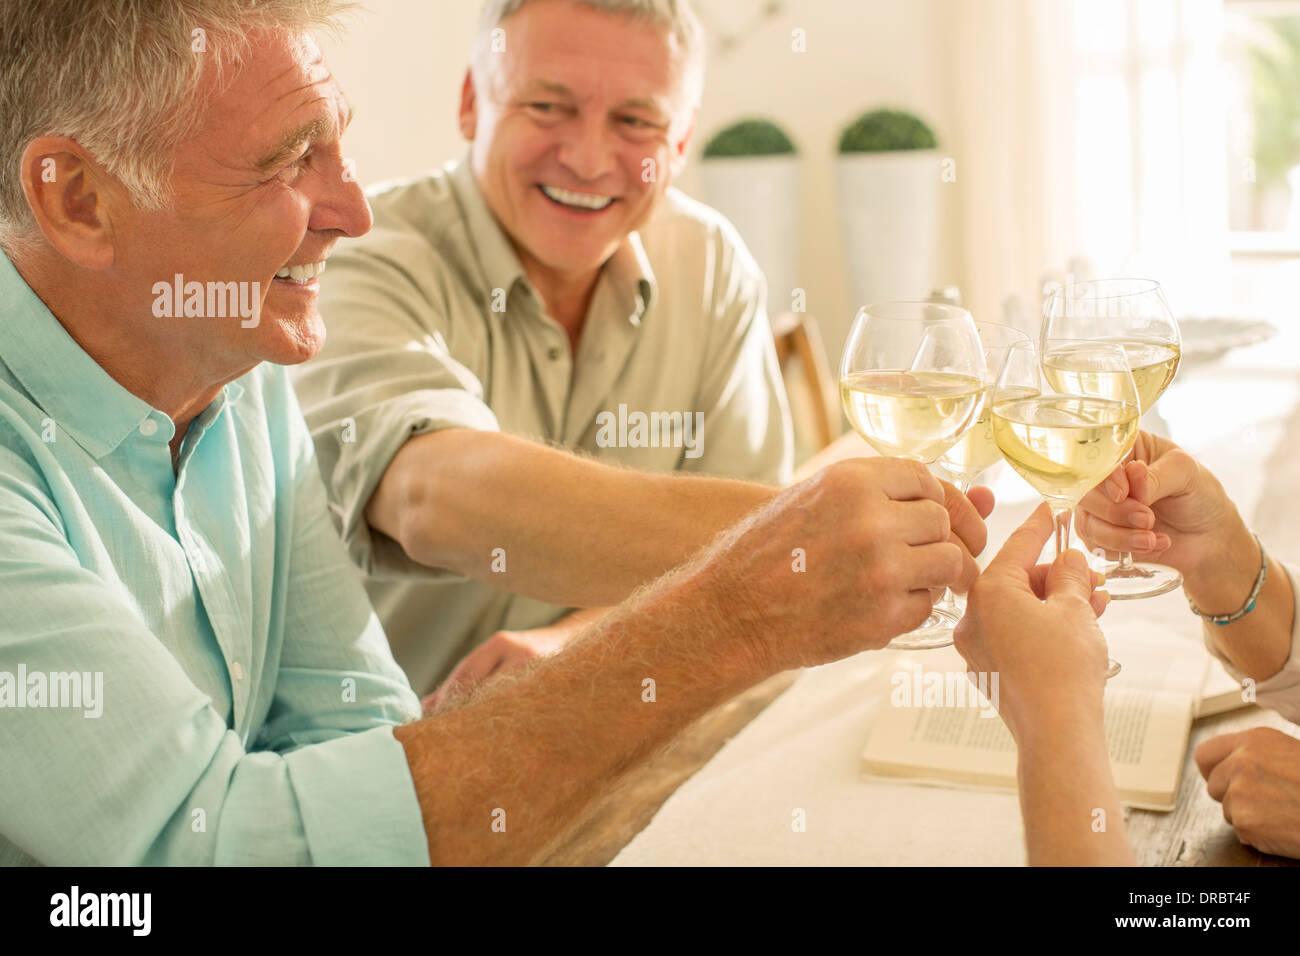 Senior friends toasting wine glasses Stock Photo